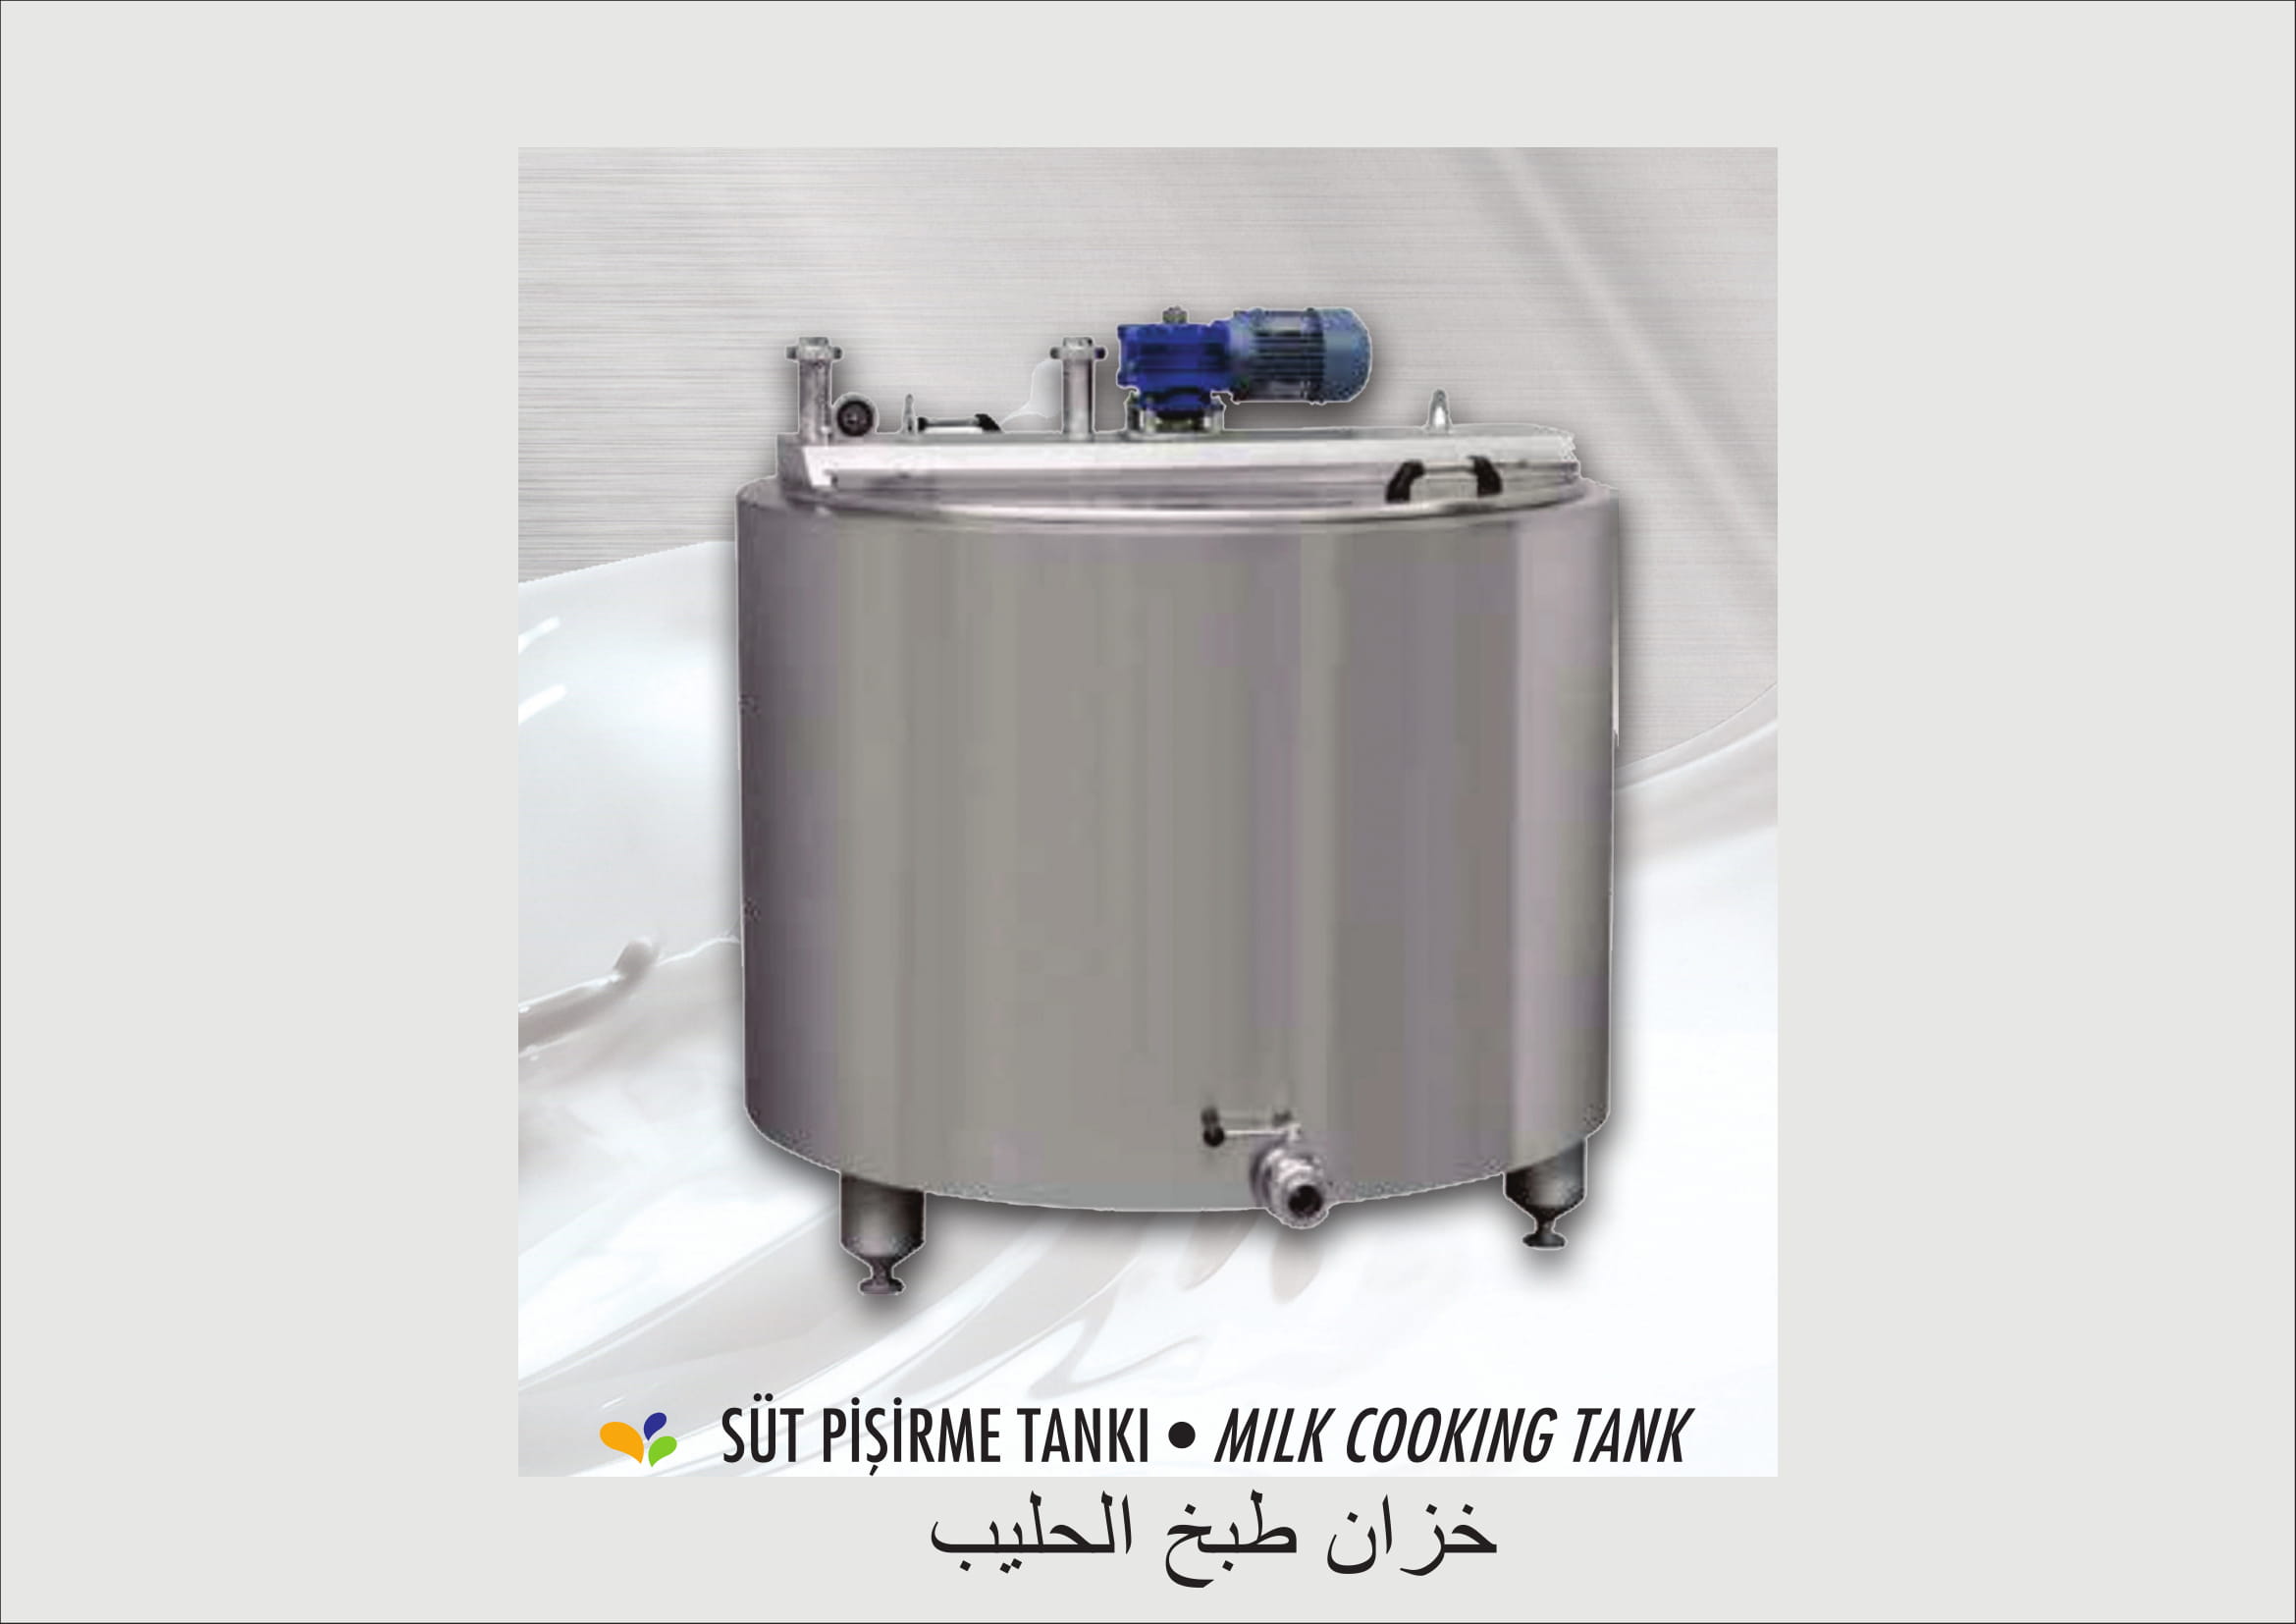 300 LT Milk Cooking Tank